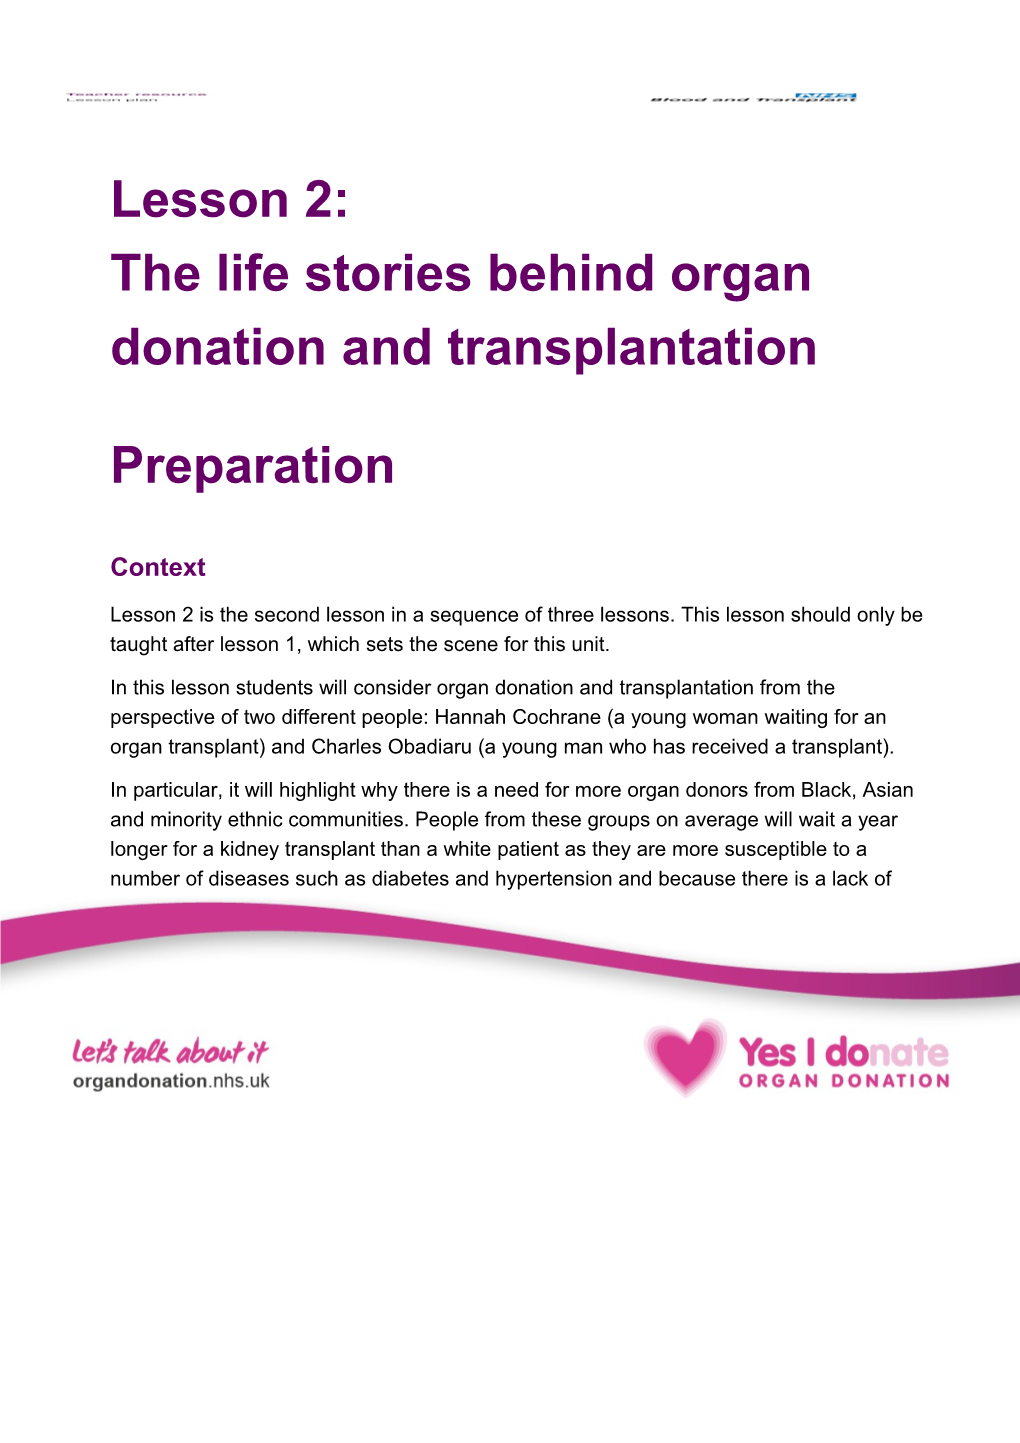 Lesson 2: the Life Stories Behind Organ Donation and Transplantation